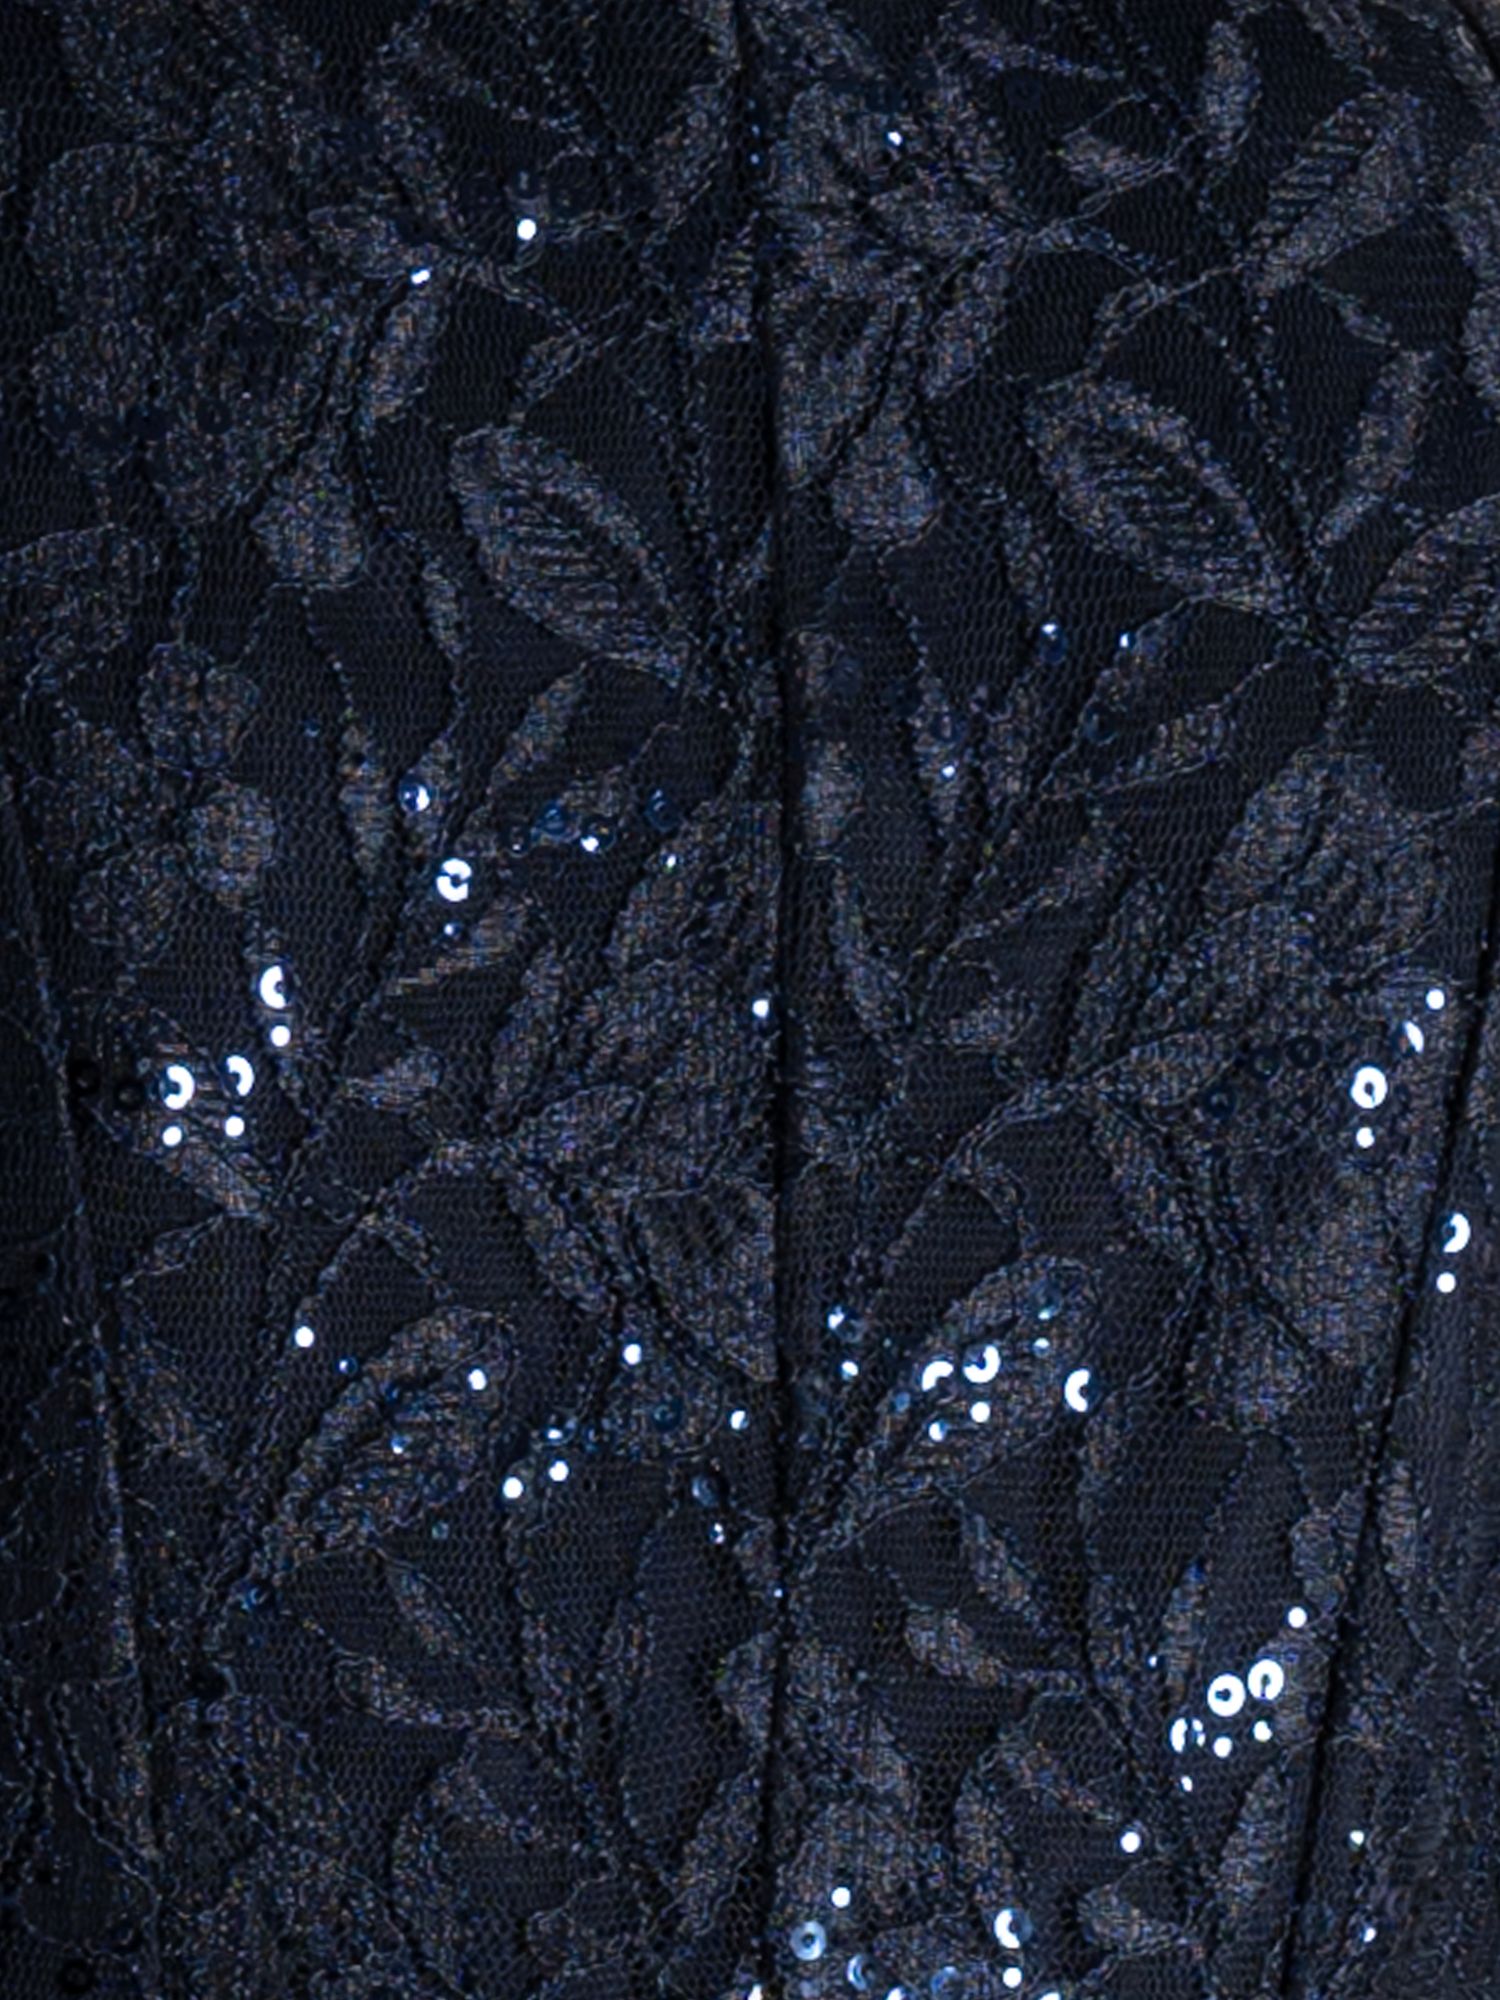 Buy chesca Sequin Lace Chiffon Trim Midi Dress, Dark Navy Online at johnlewis.com